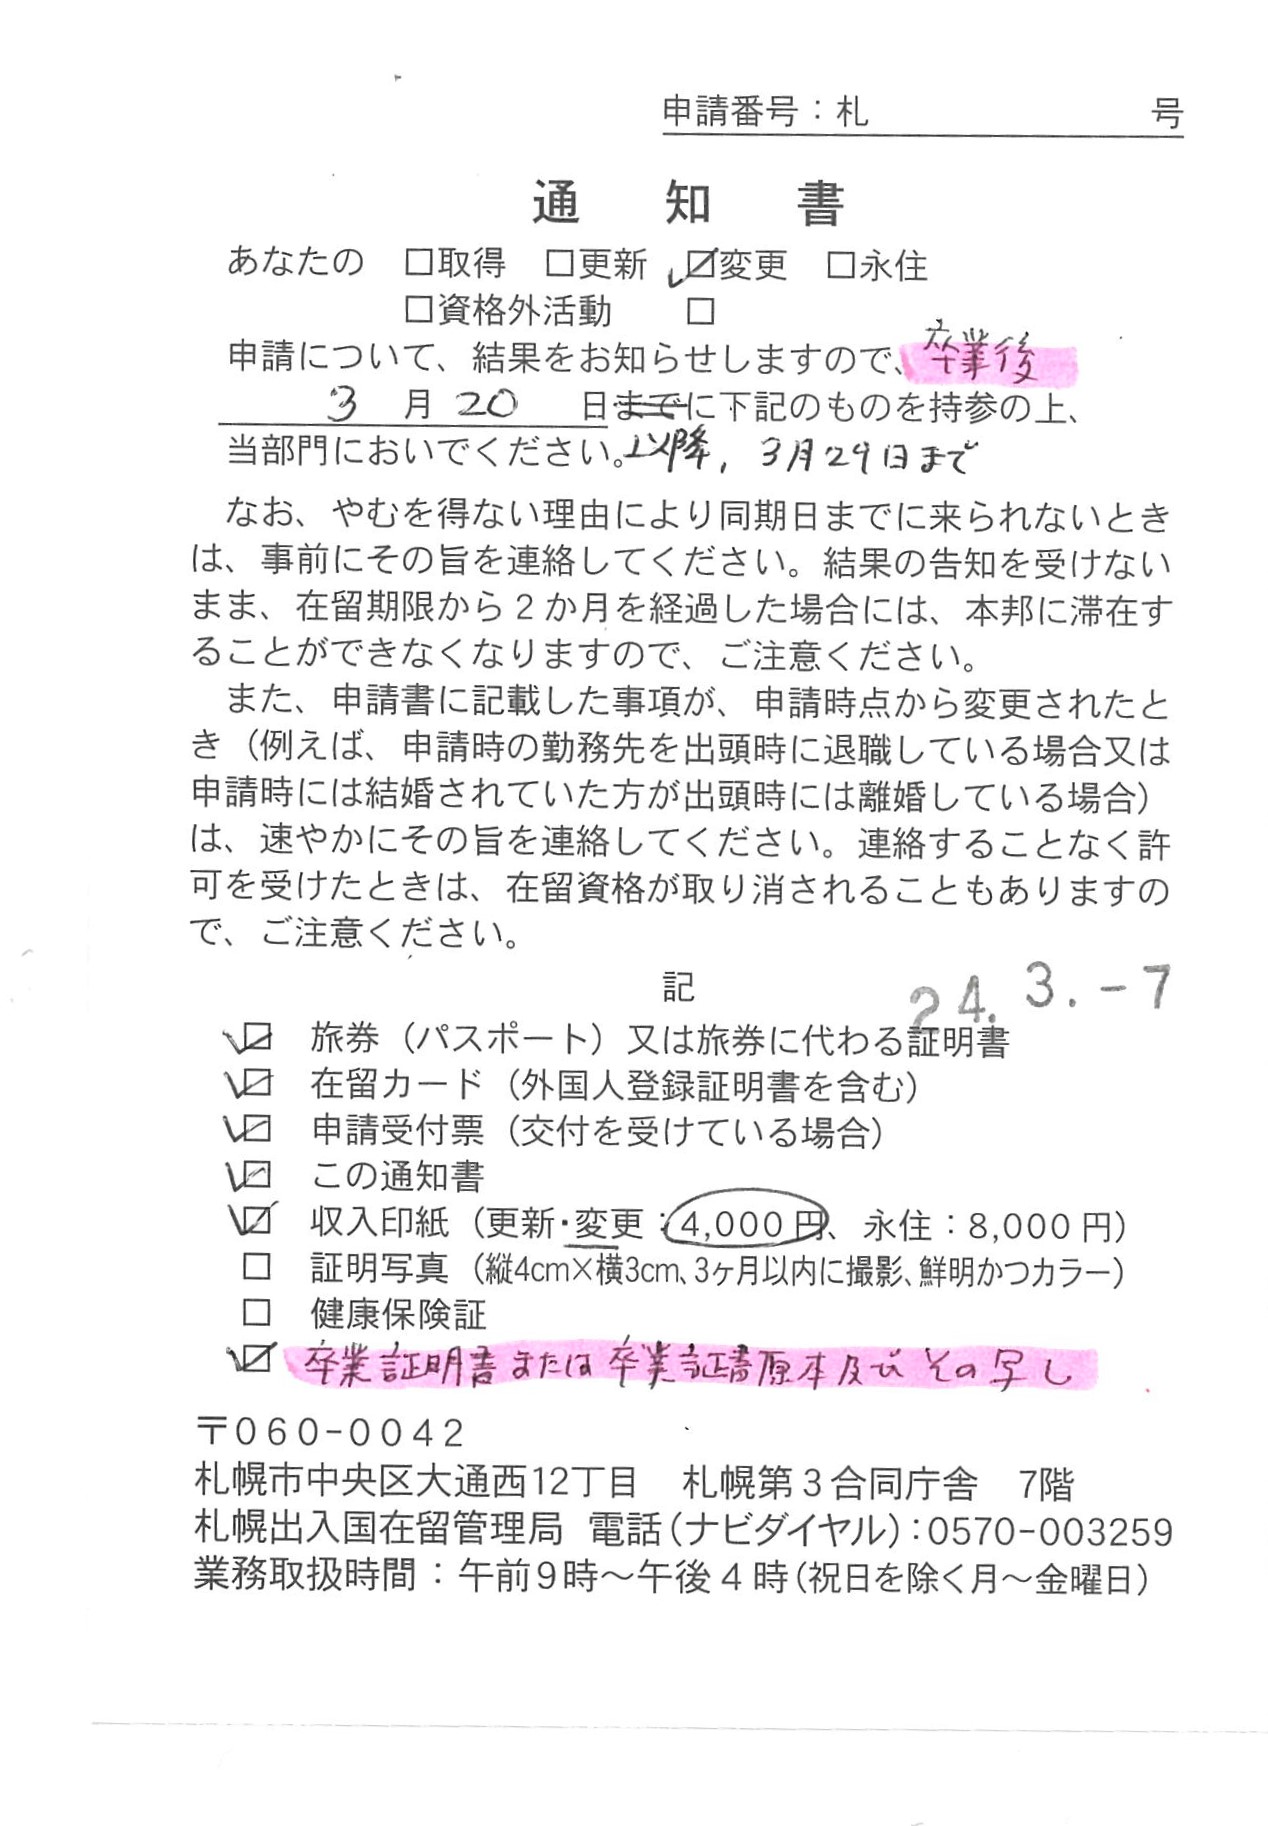 【在留資格変更許可】 【Change residence status】　【居留资格变更许可】